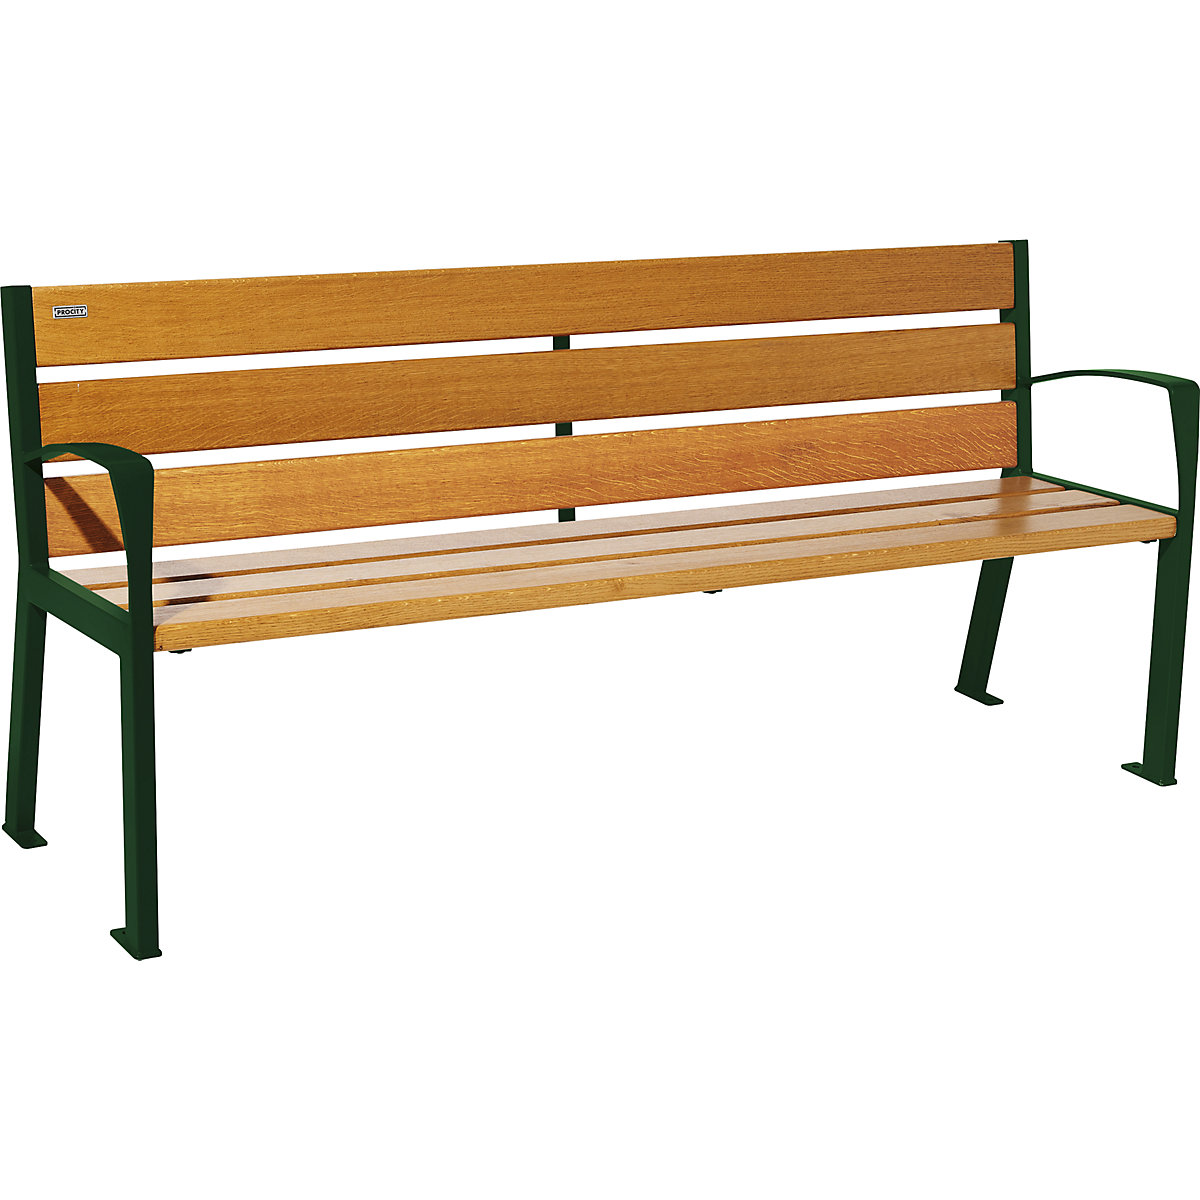 SILAOS® wooden bench with back rest – PROCITY, height 866 mm, length 1800 mm, moss green, light oak finish-4